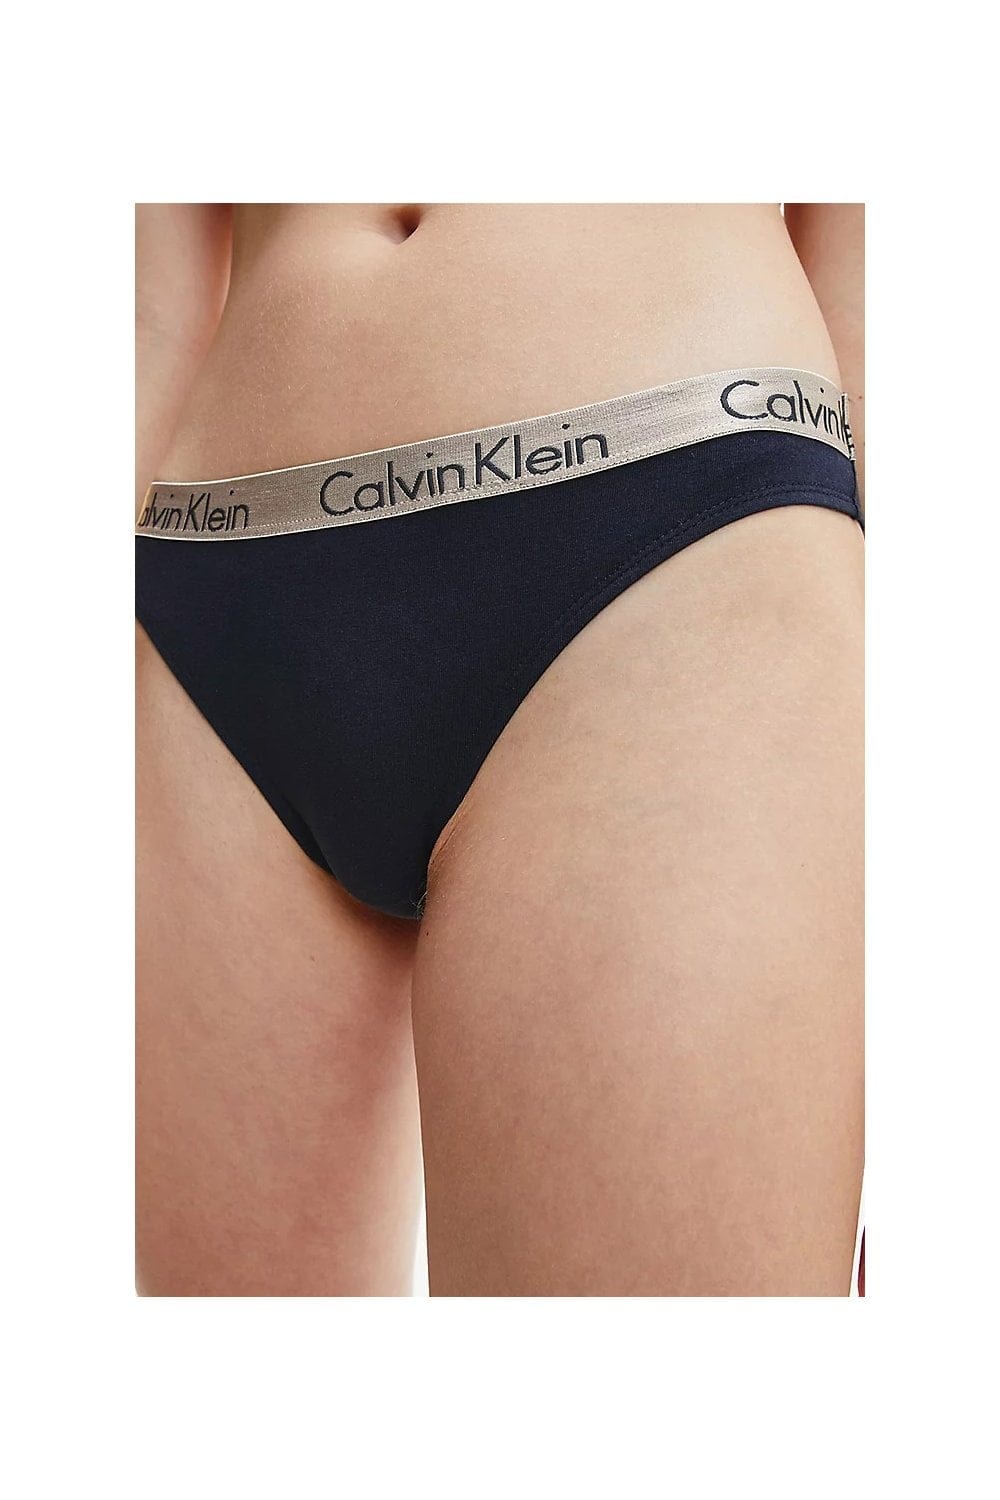  Calvin Klein Women's Radiant Logo Cotton 3 Pack Thong